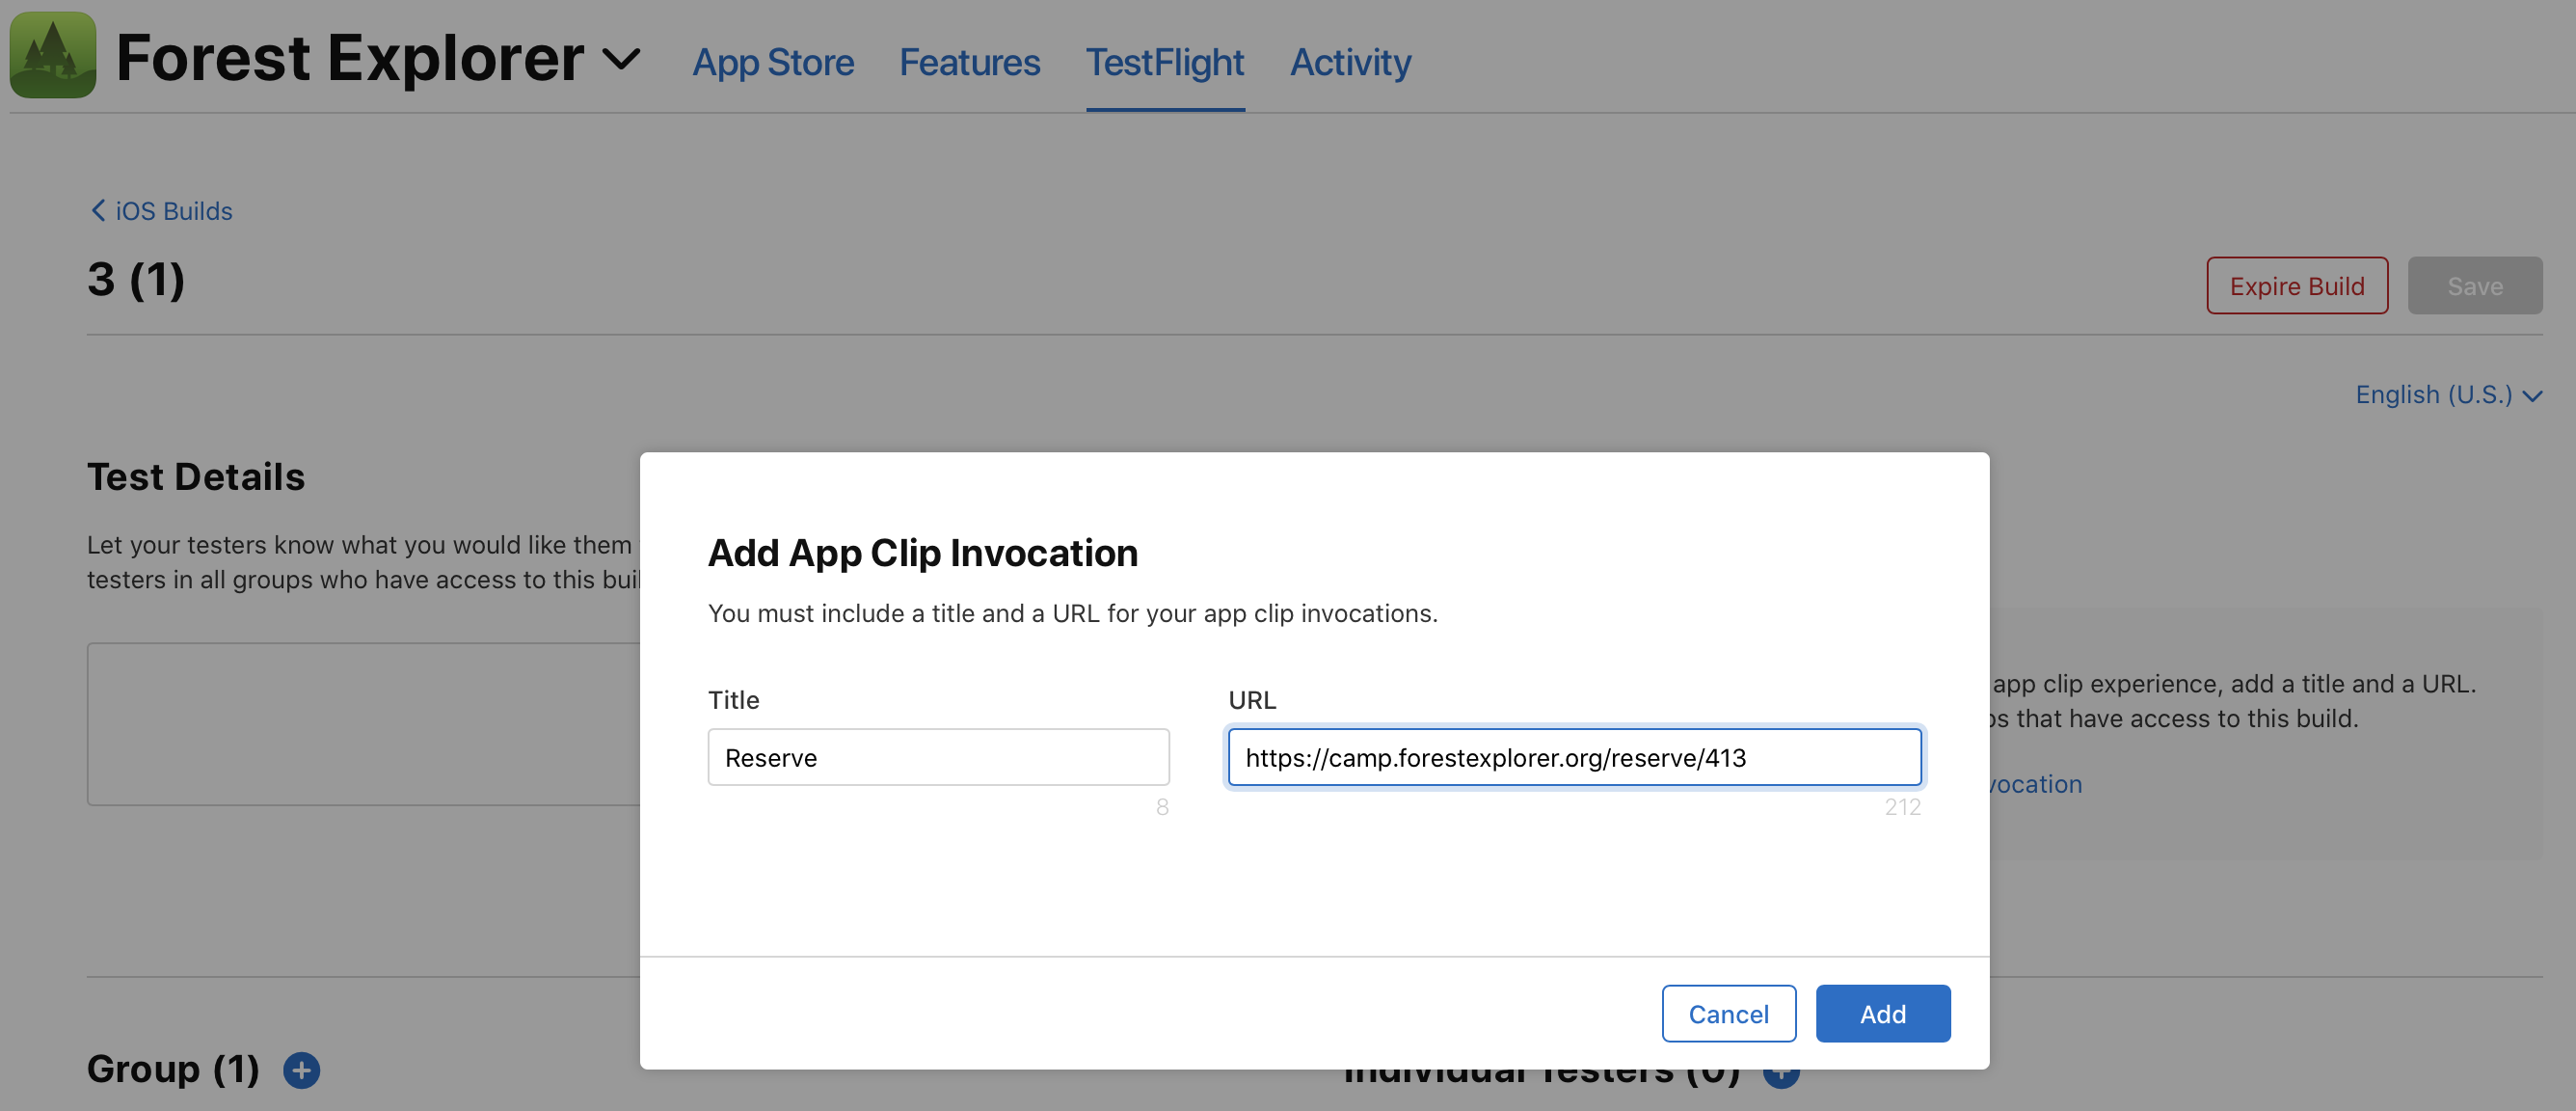 Add App Clip invocation dialog